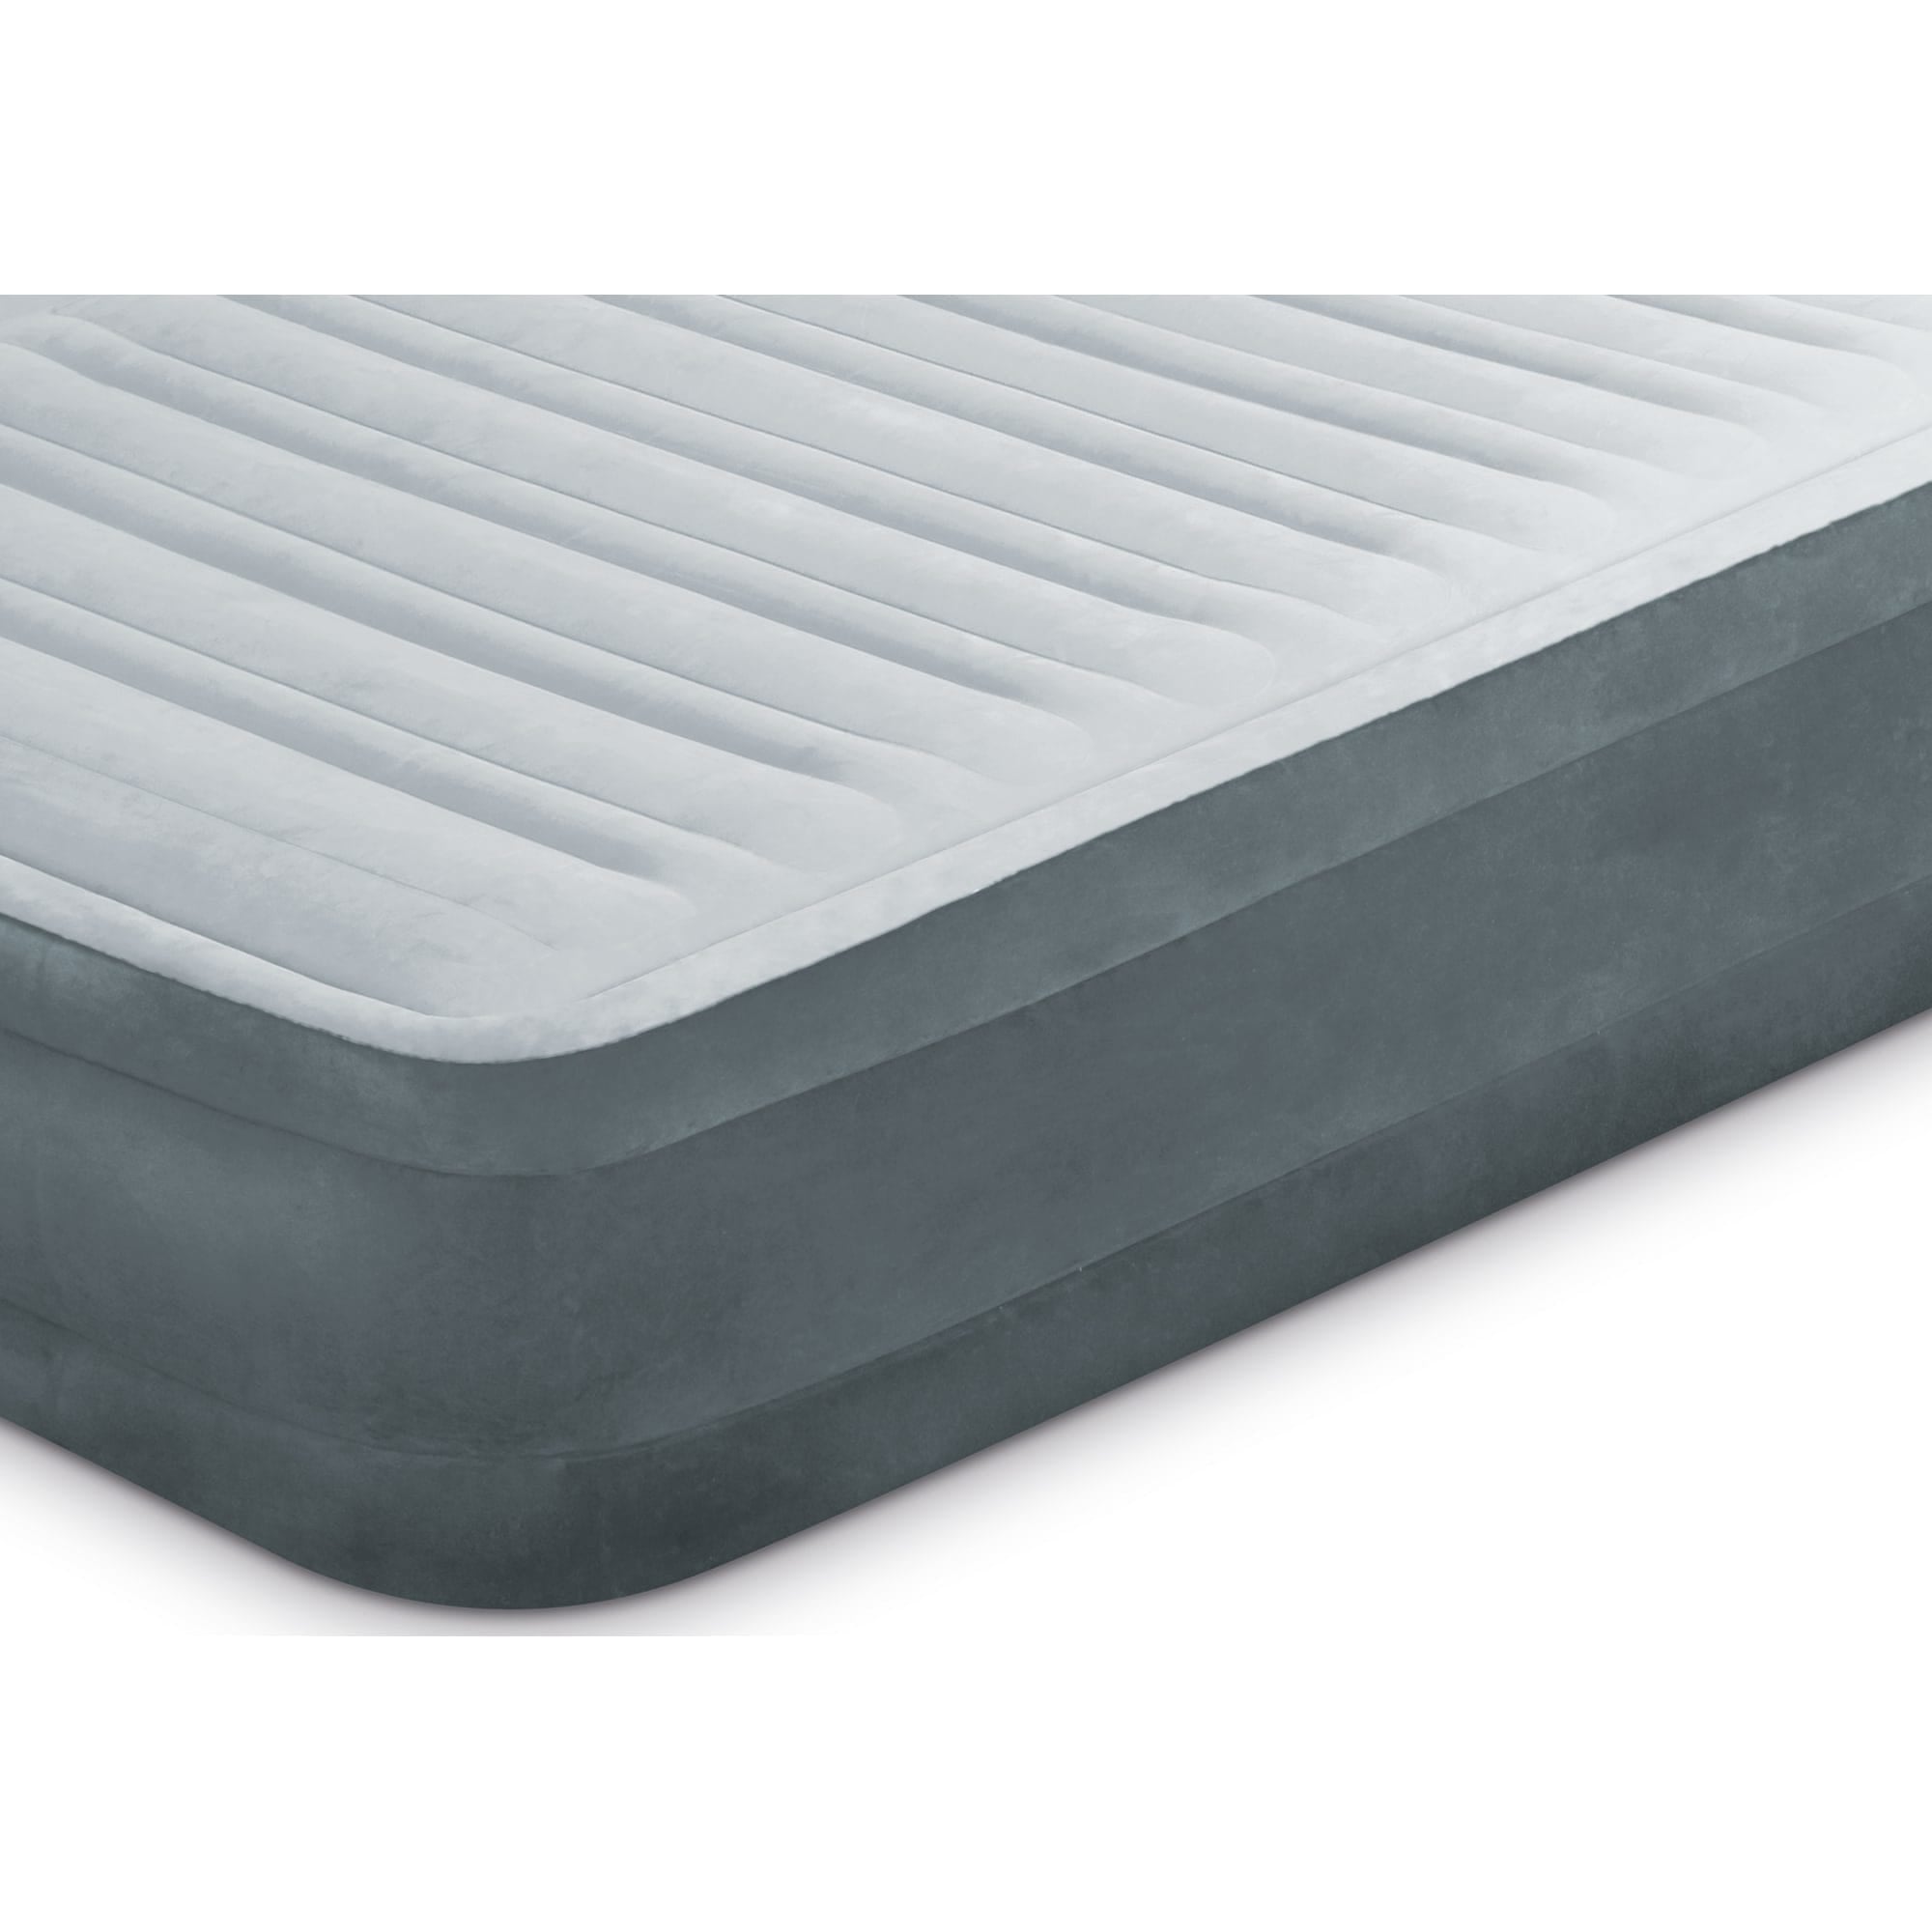 Intex Dura-Beam Comfort Plush Full Air Bed, Grey $80.00 EACH, CASE PACK OF 2